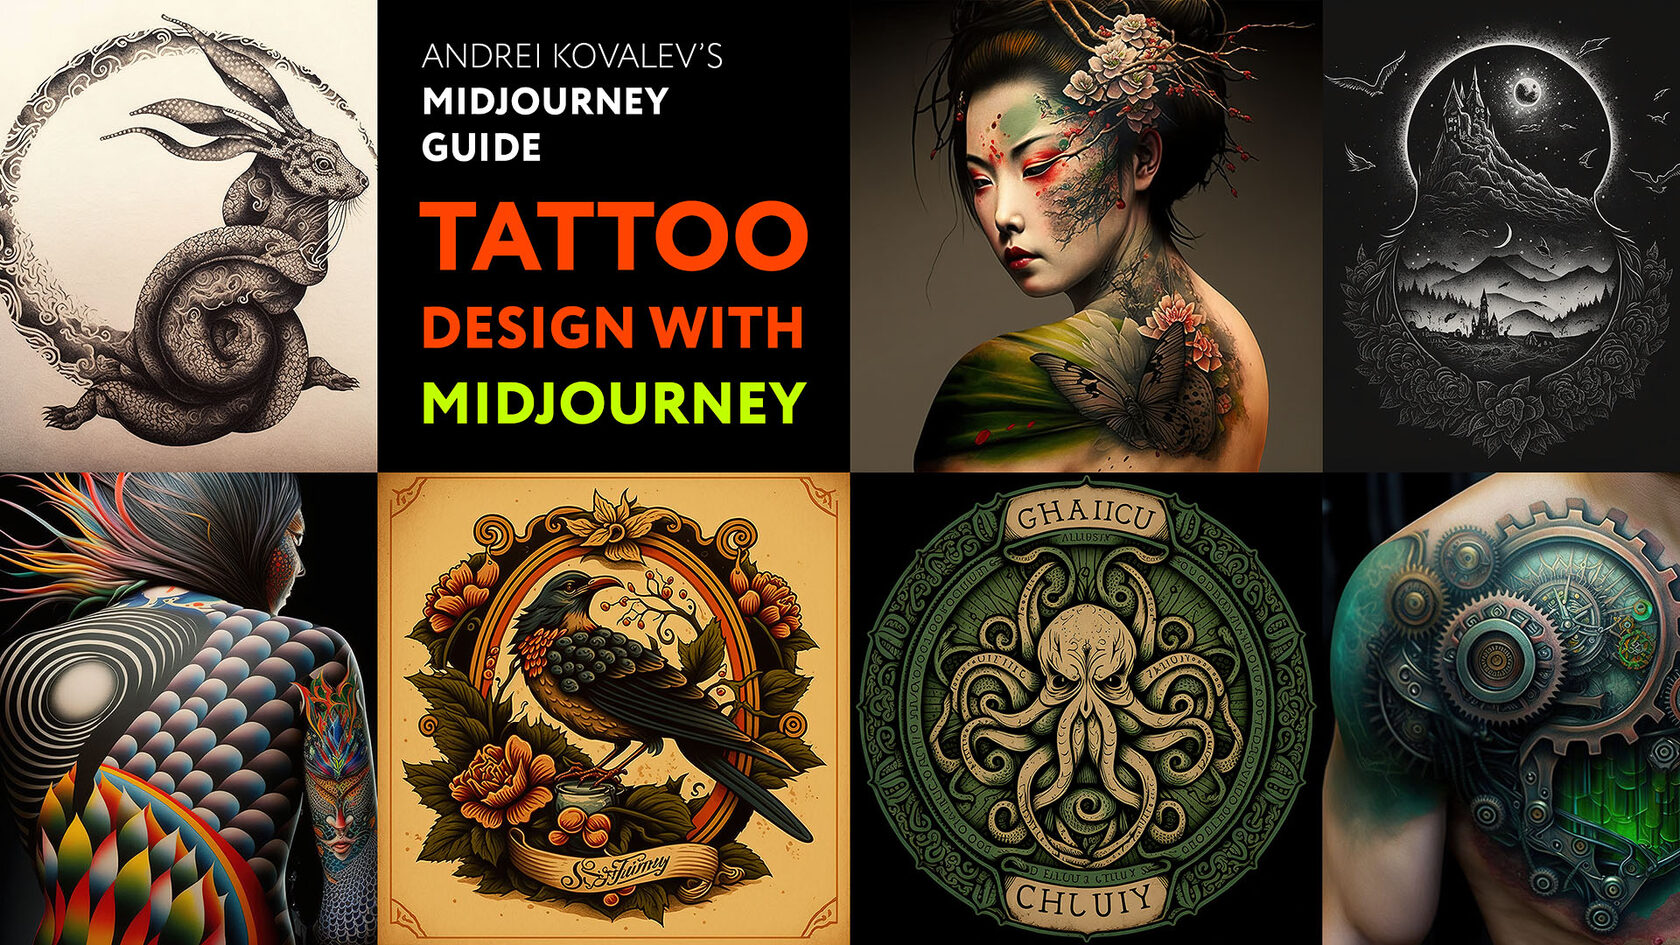 Share 91+ about mj tattoo design best .vn